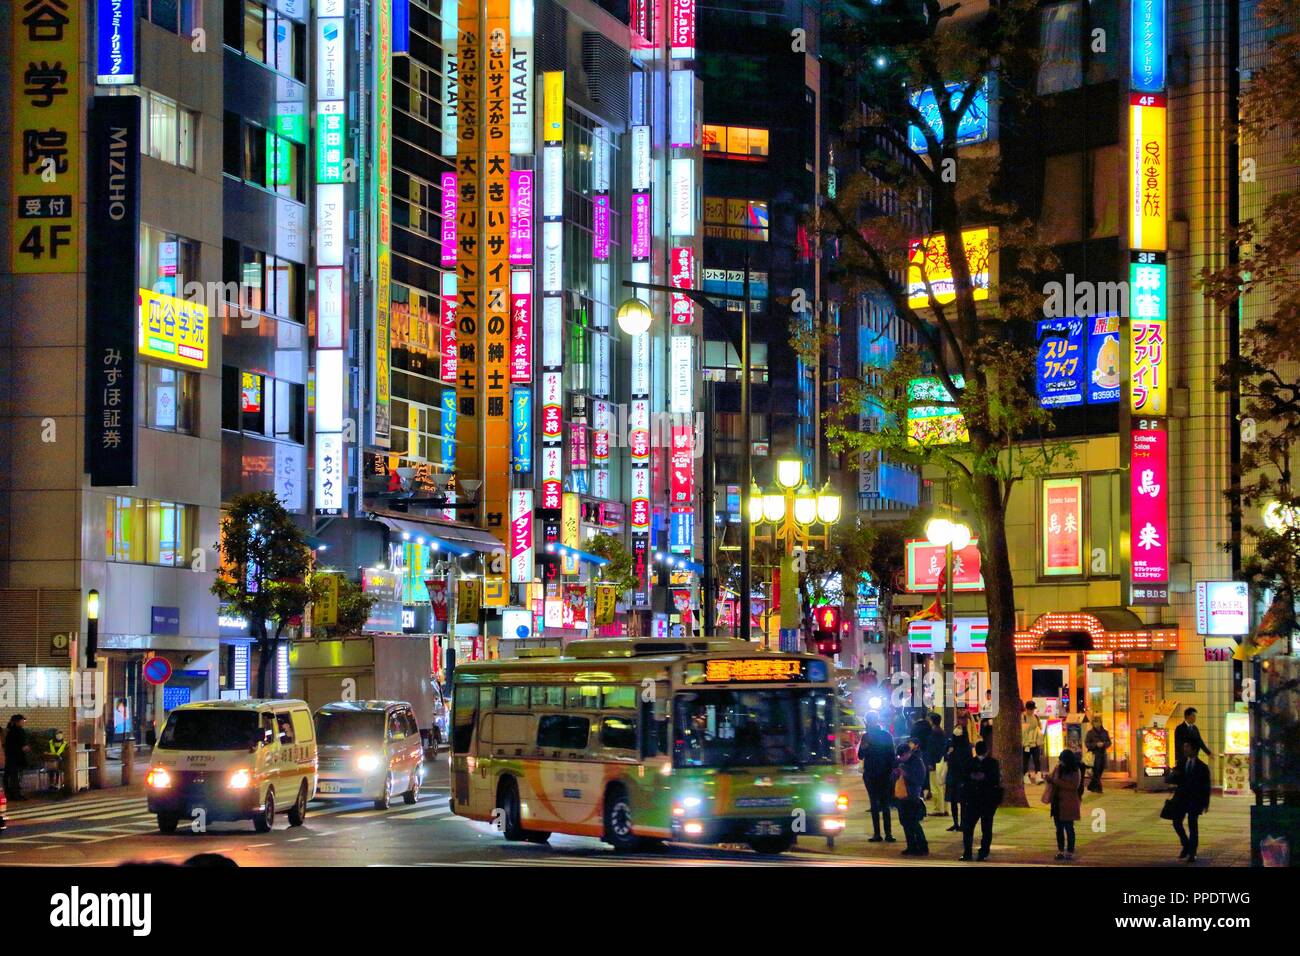 TOKYO, JAPAN - NOVEMBER 29, 2016: People visit night Ikebukuro district of Tokyo, Japan. Tokyo is the capital city of Japan. 37.8 million people live  Stock Photo